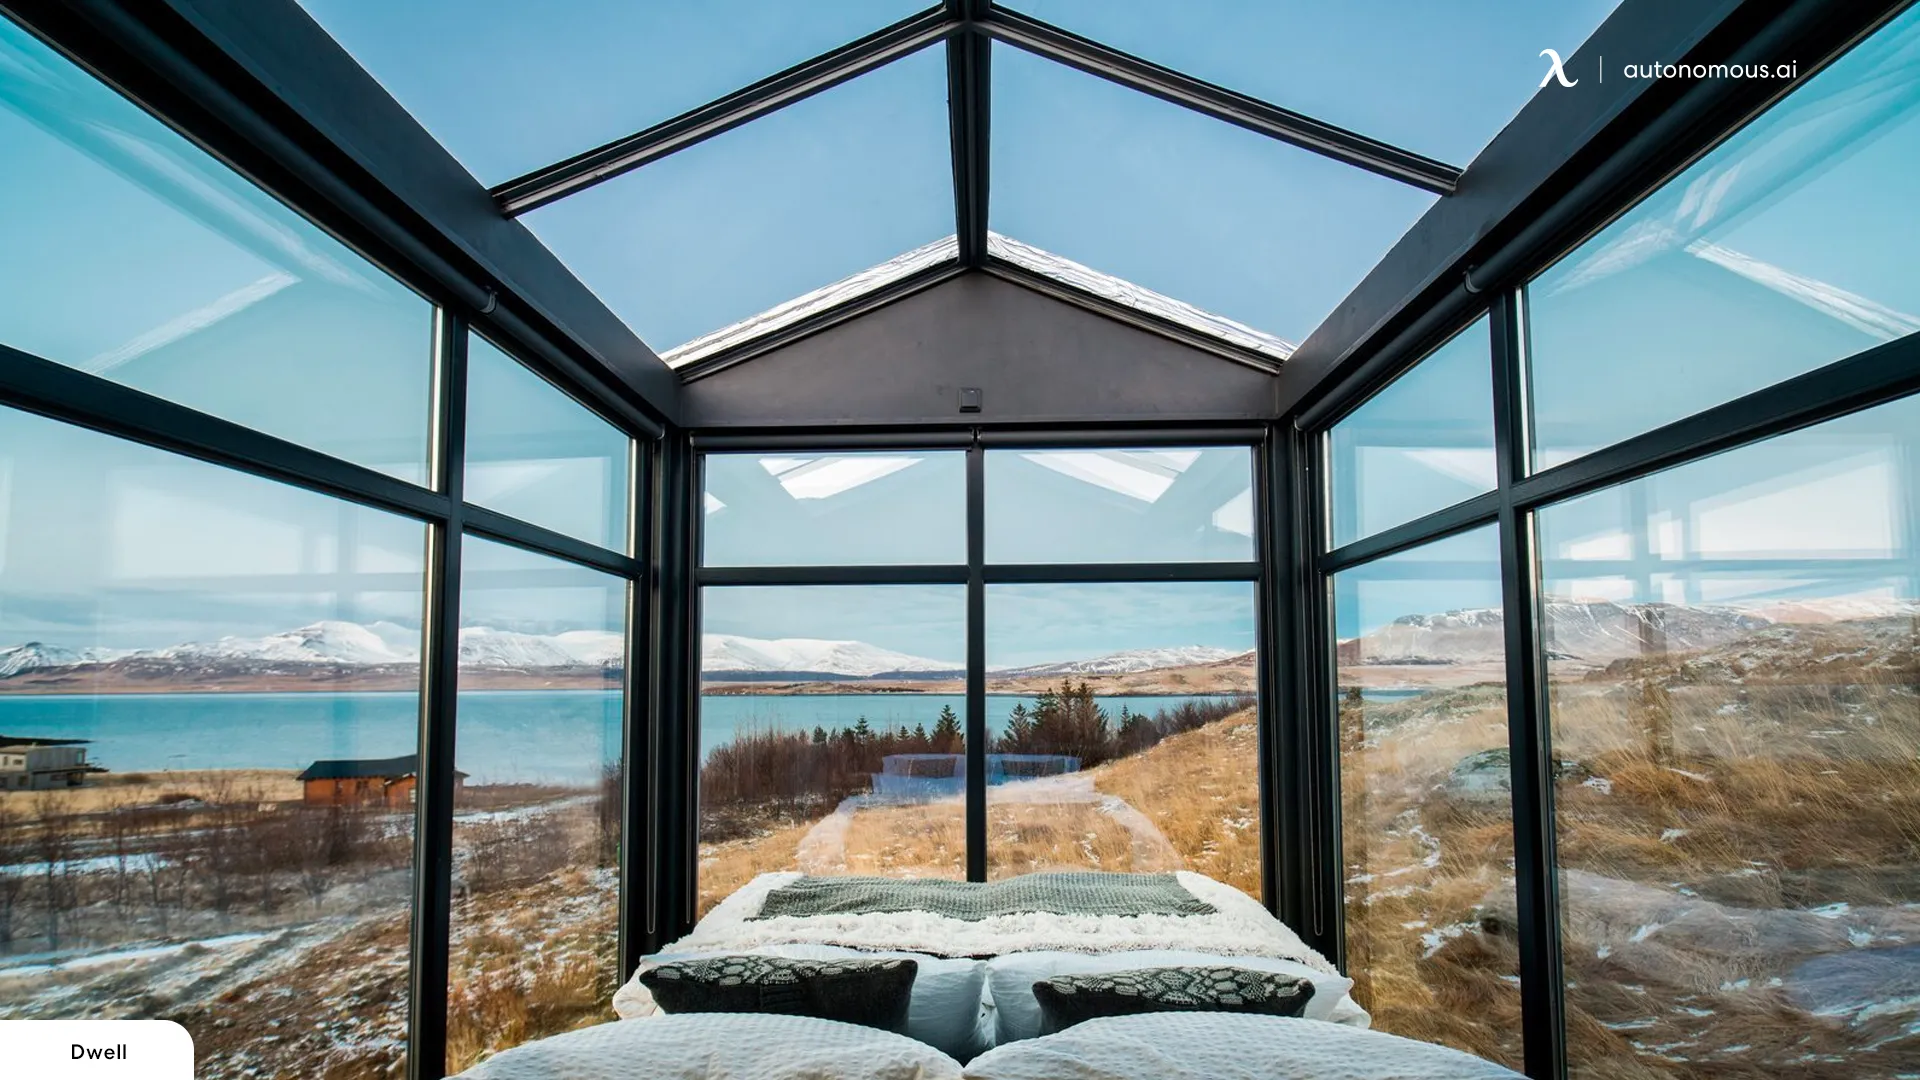 Install a Glass Ceiling - Tiny house ceiling ideas